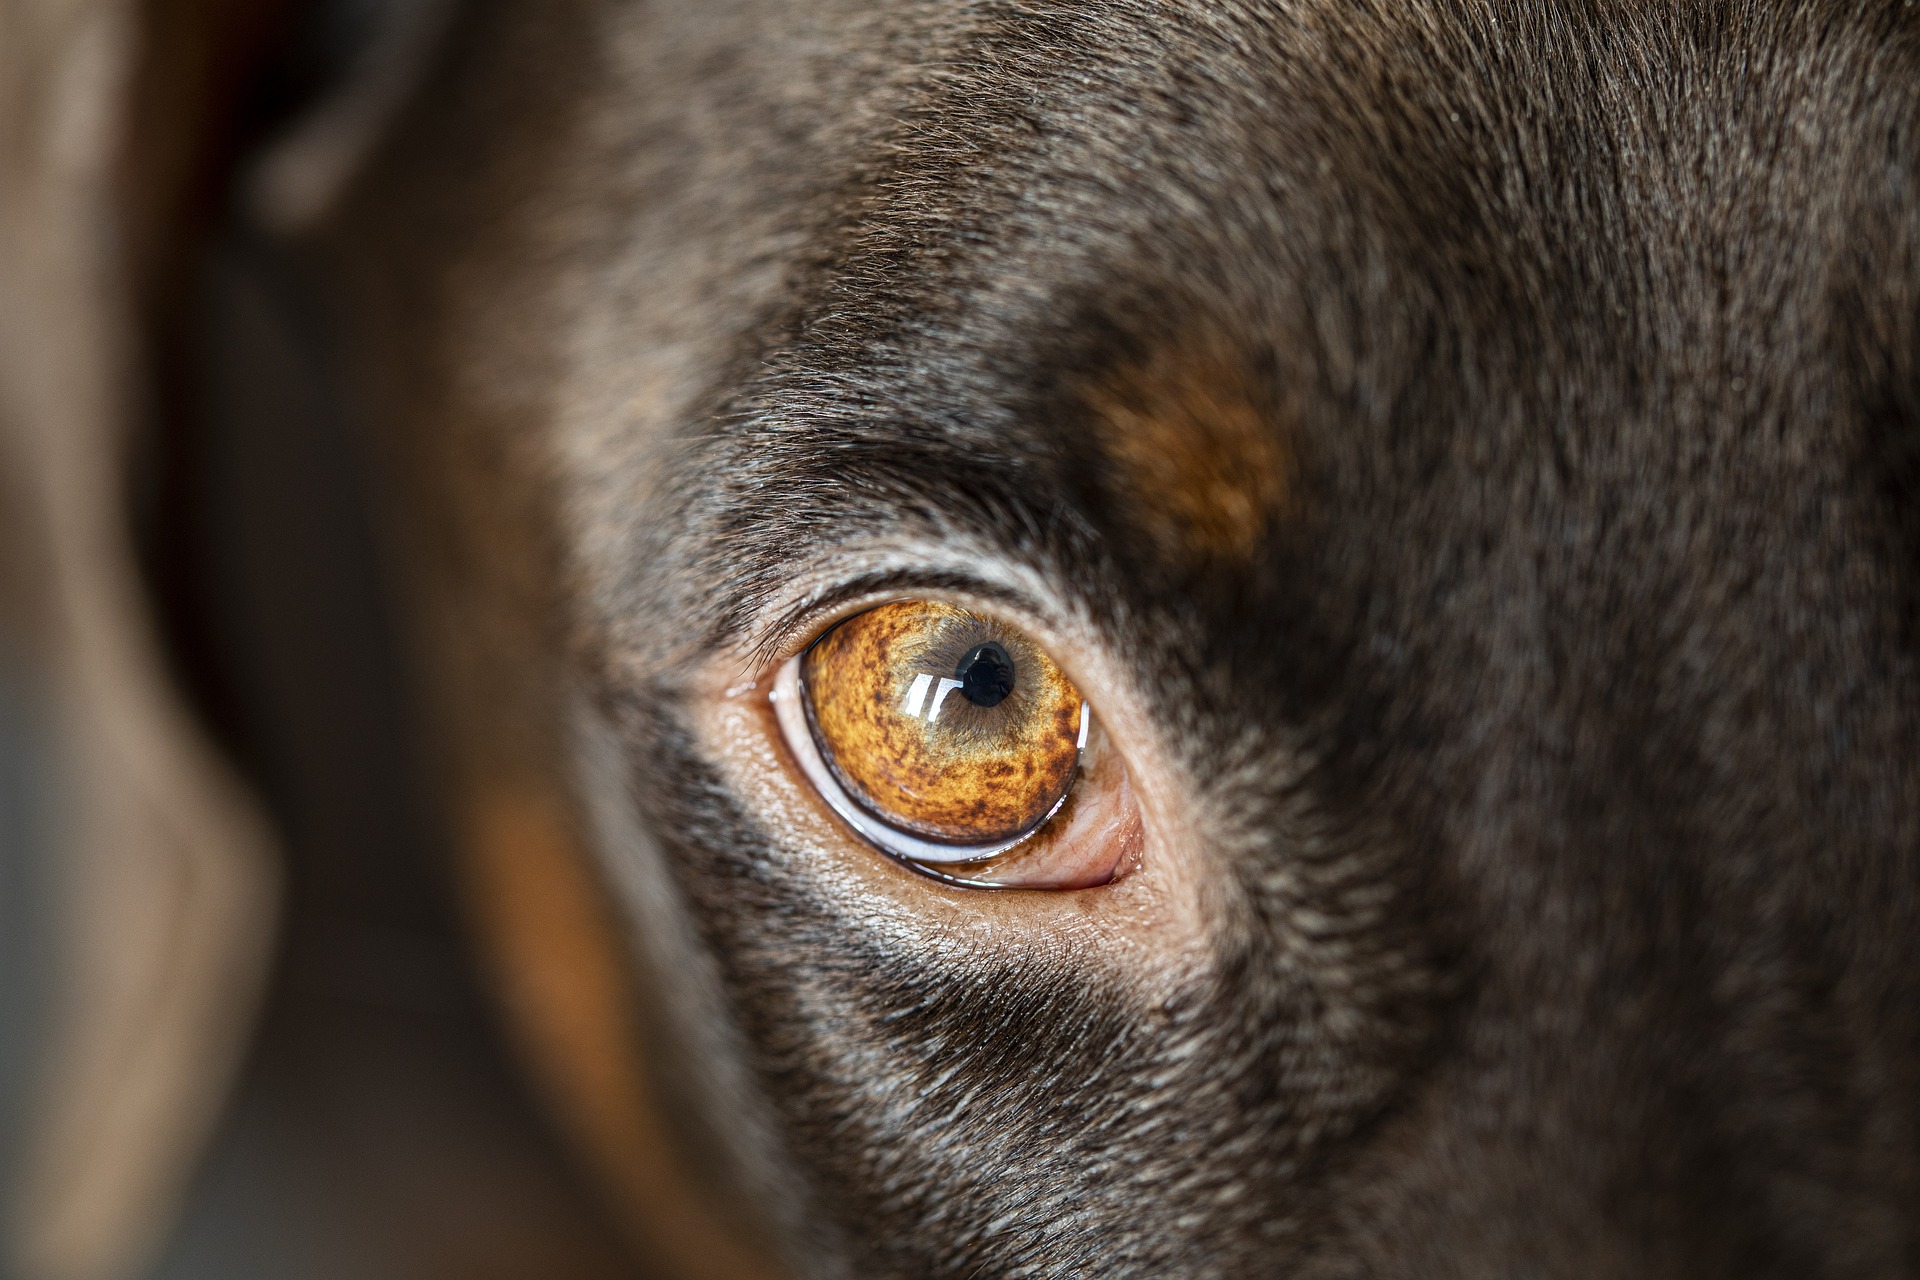 Dog’s eye closeup